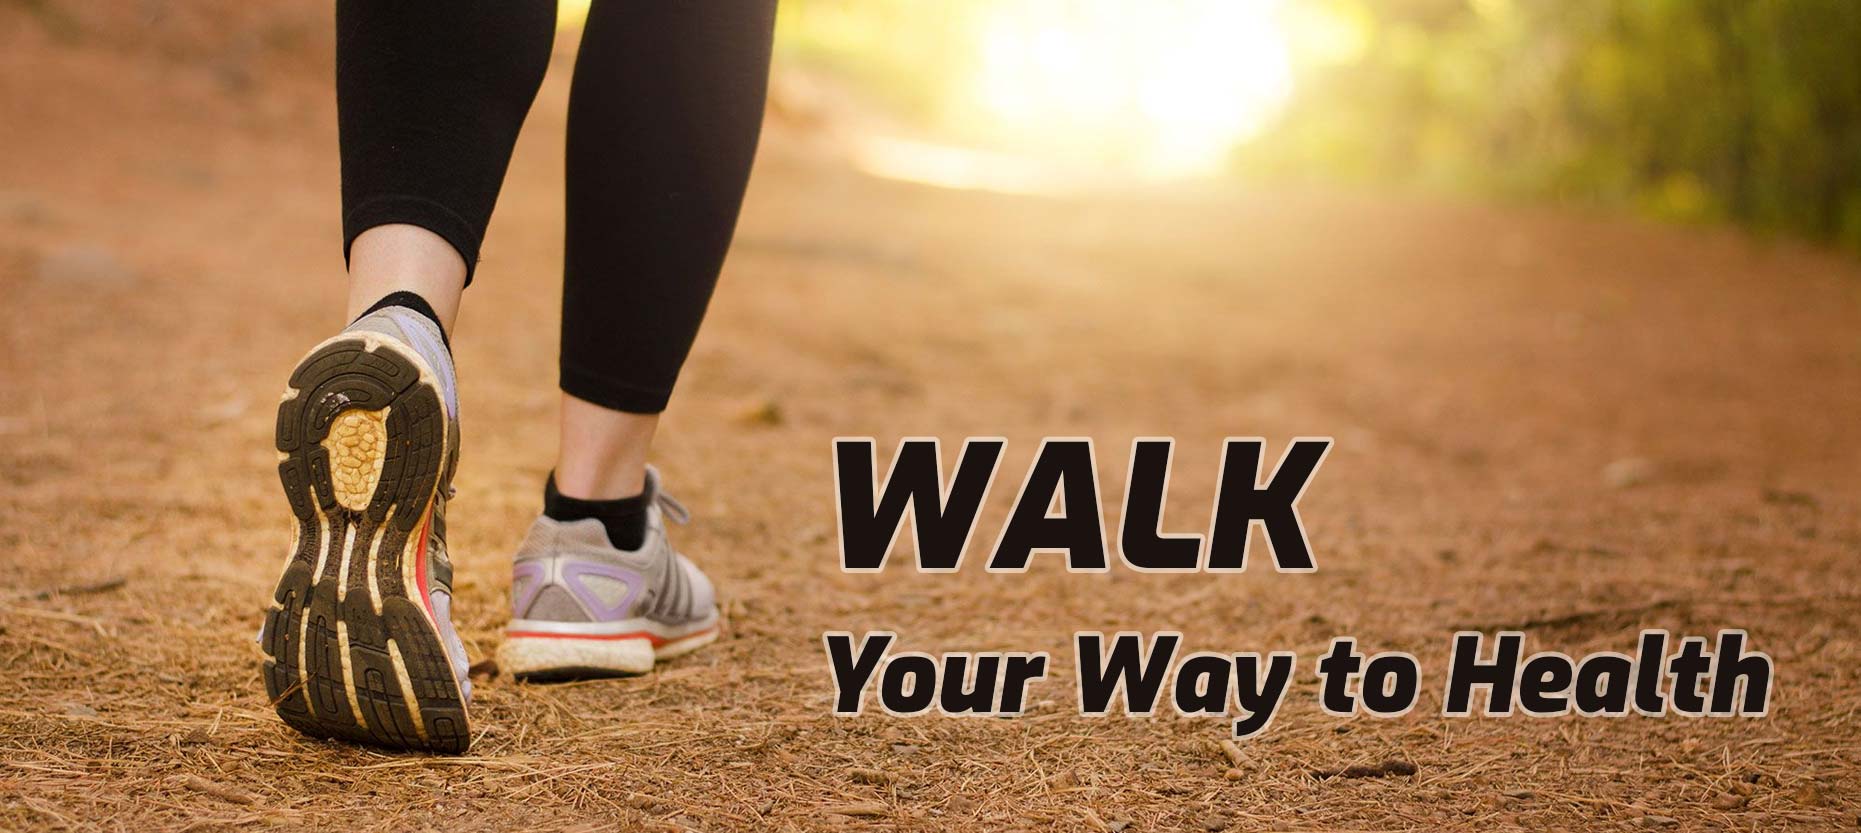 Walk Your Way to Health